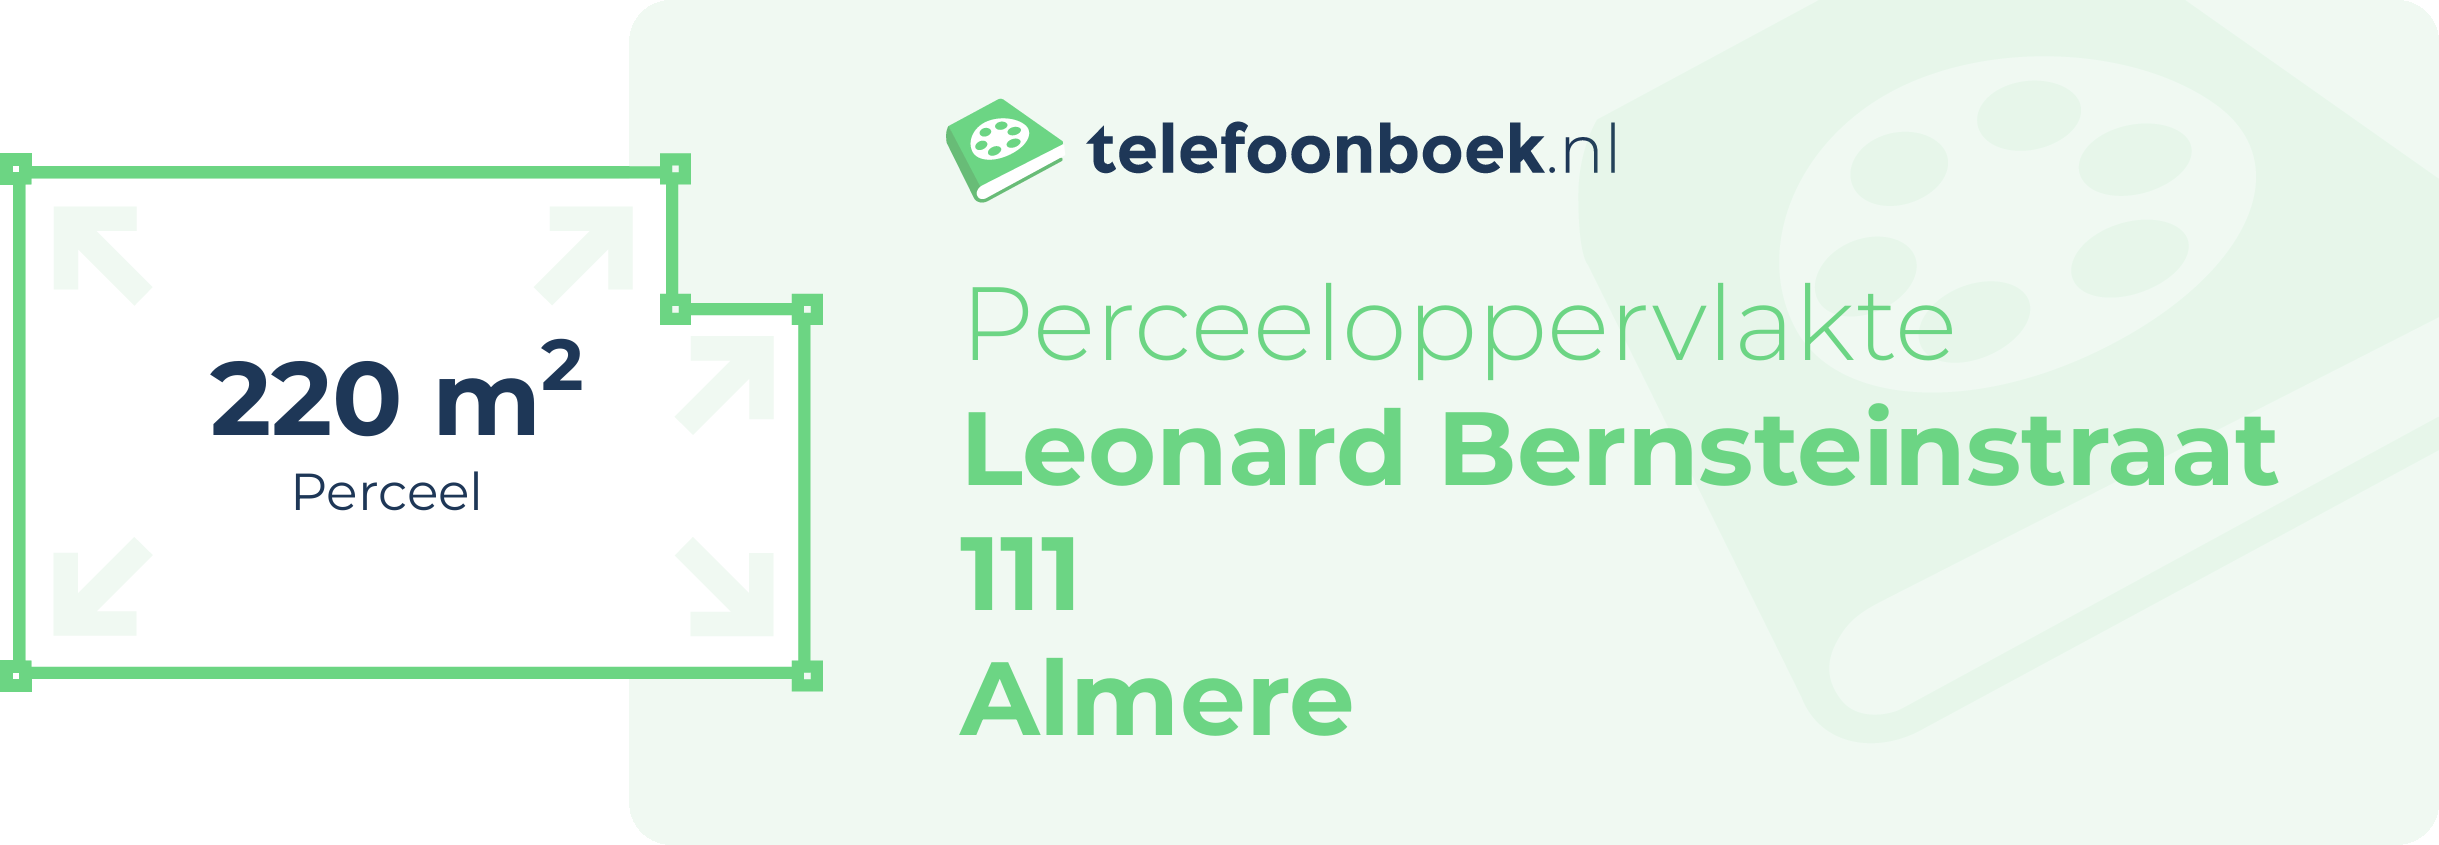 Perceeloppervlakte Leonard Bernsteinstraat 111 Almere